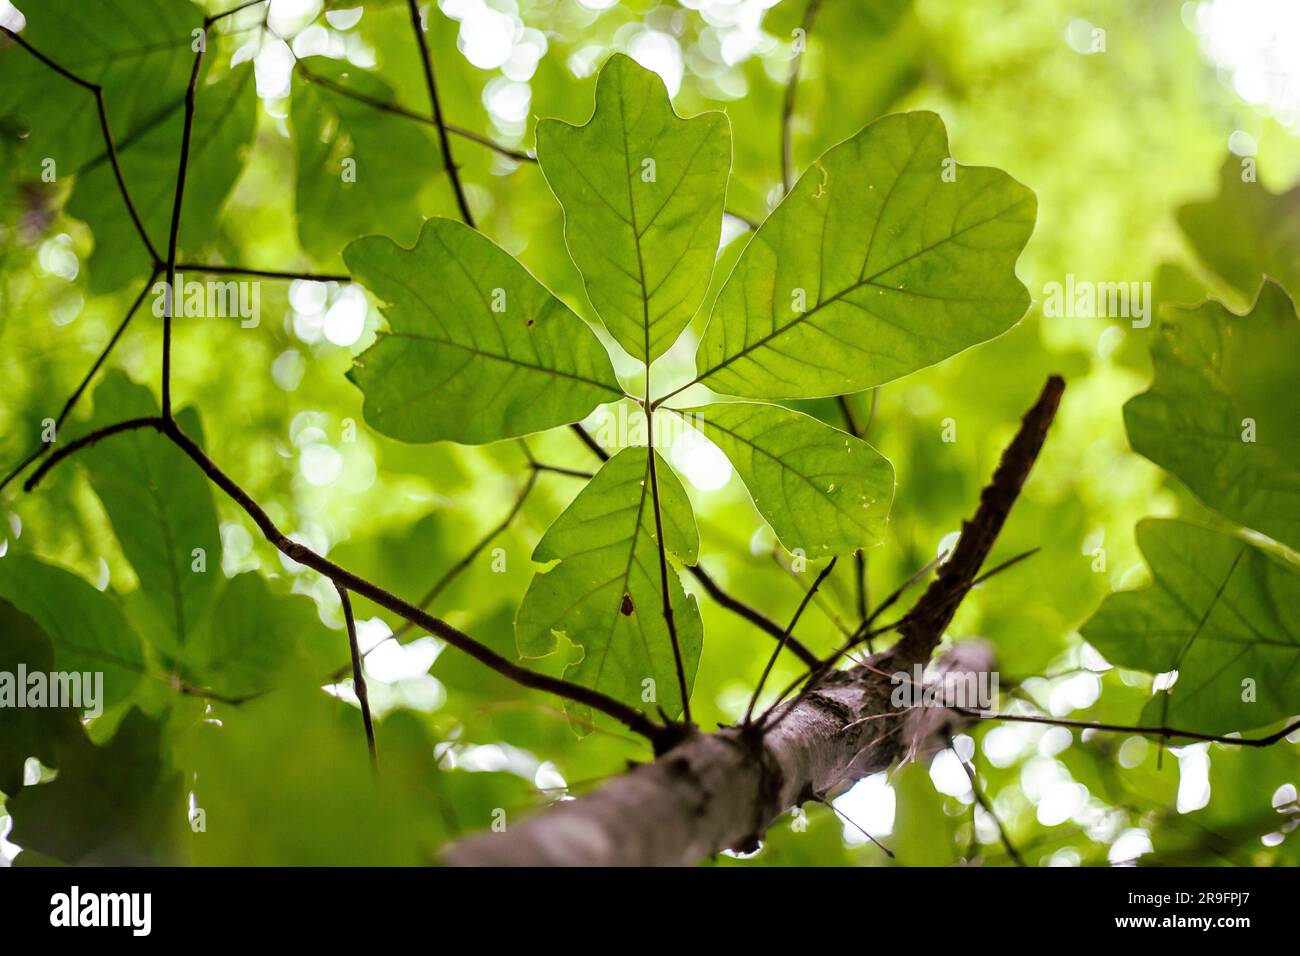 A Blackjack Oak tree (Quercus marilandica) in the North Carolina forest displays its distinctive tri-lobe blackjack shaped leaves. Stock Photo